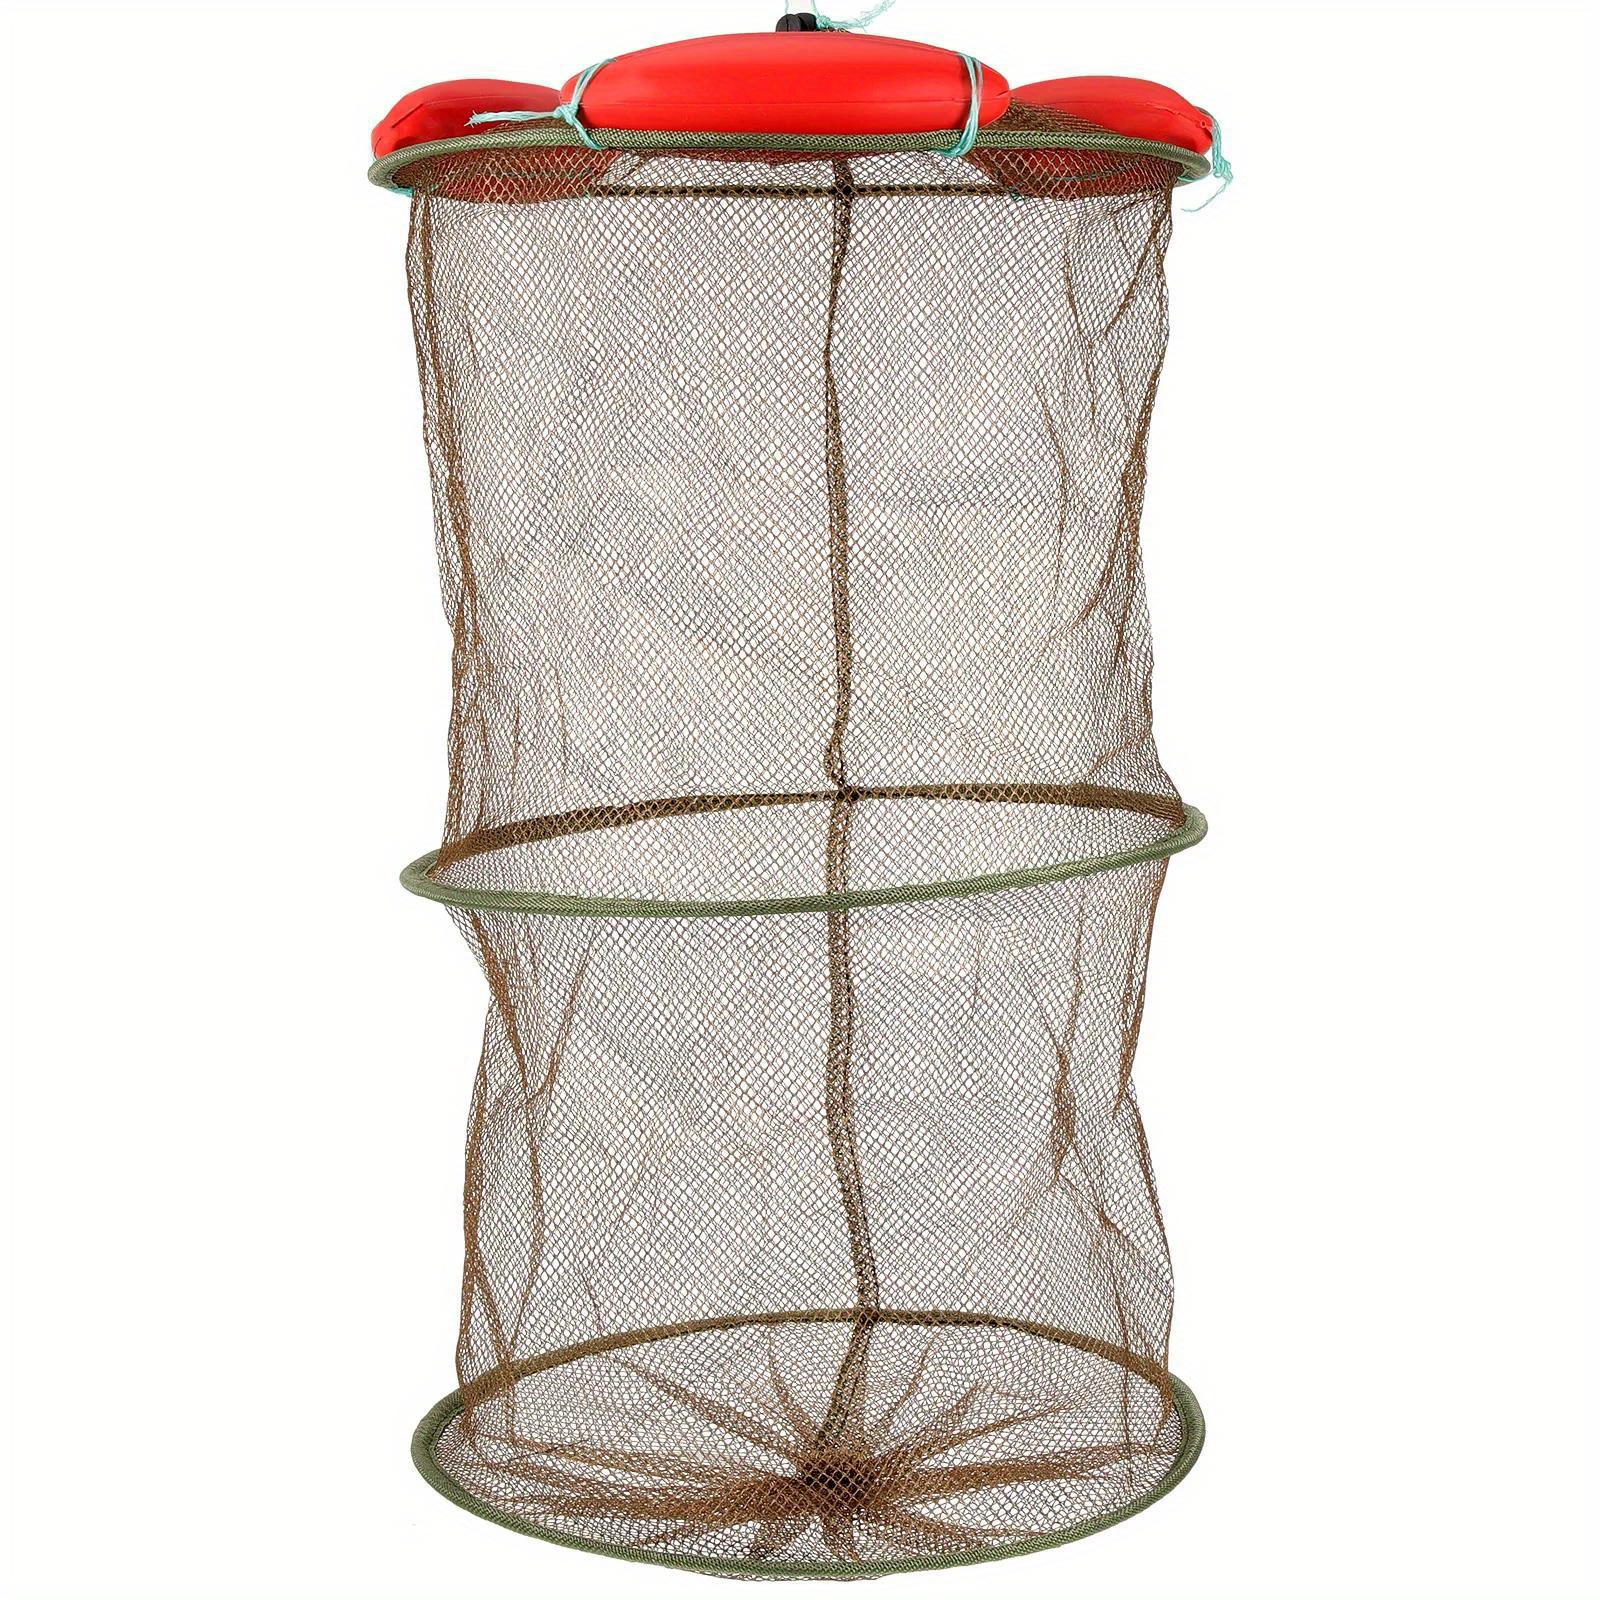 Fishing Net~Mesh Bag Green Fish Bag Cage Tackle Fishing Landing